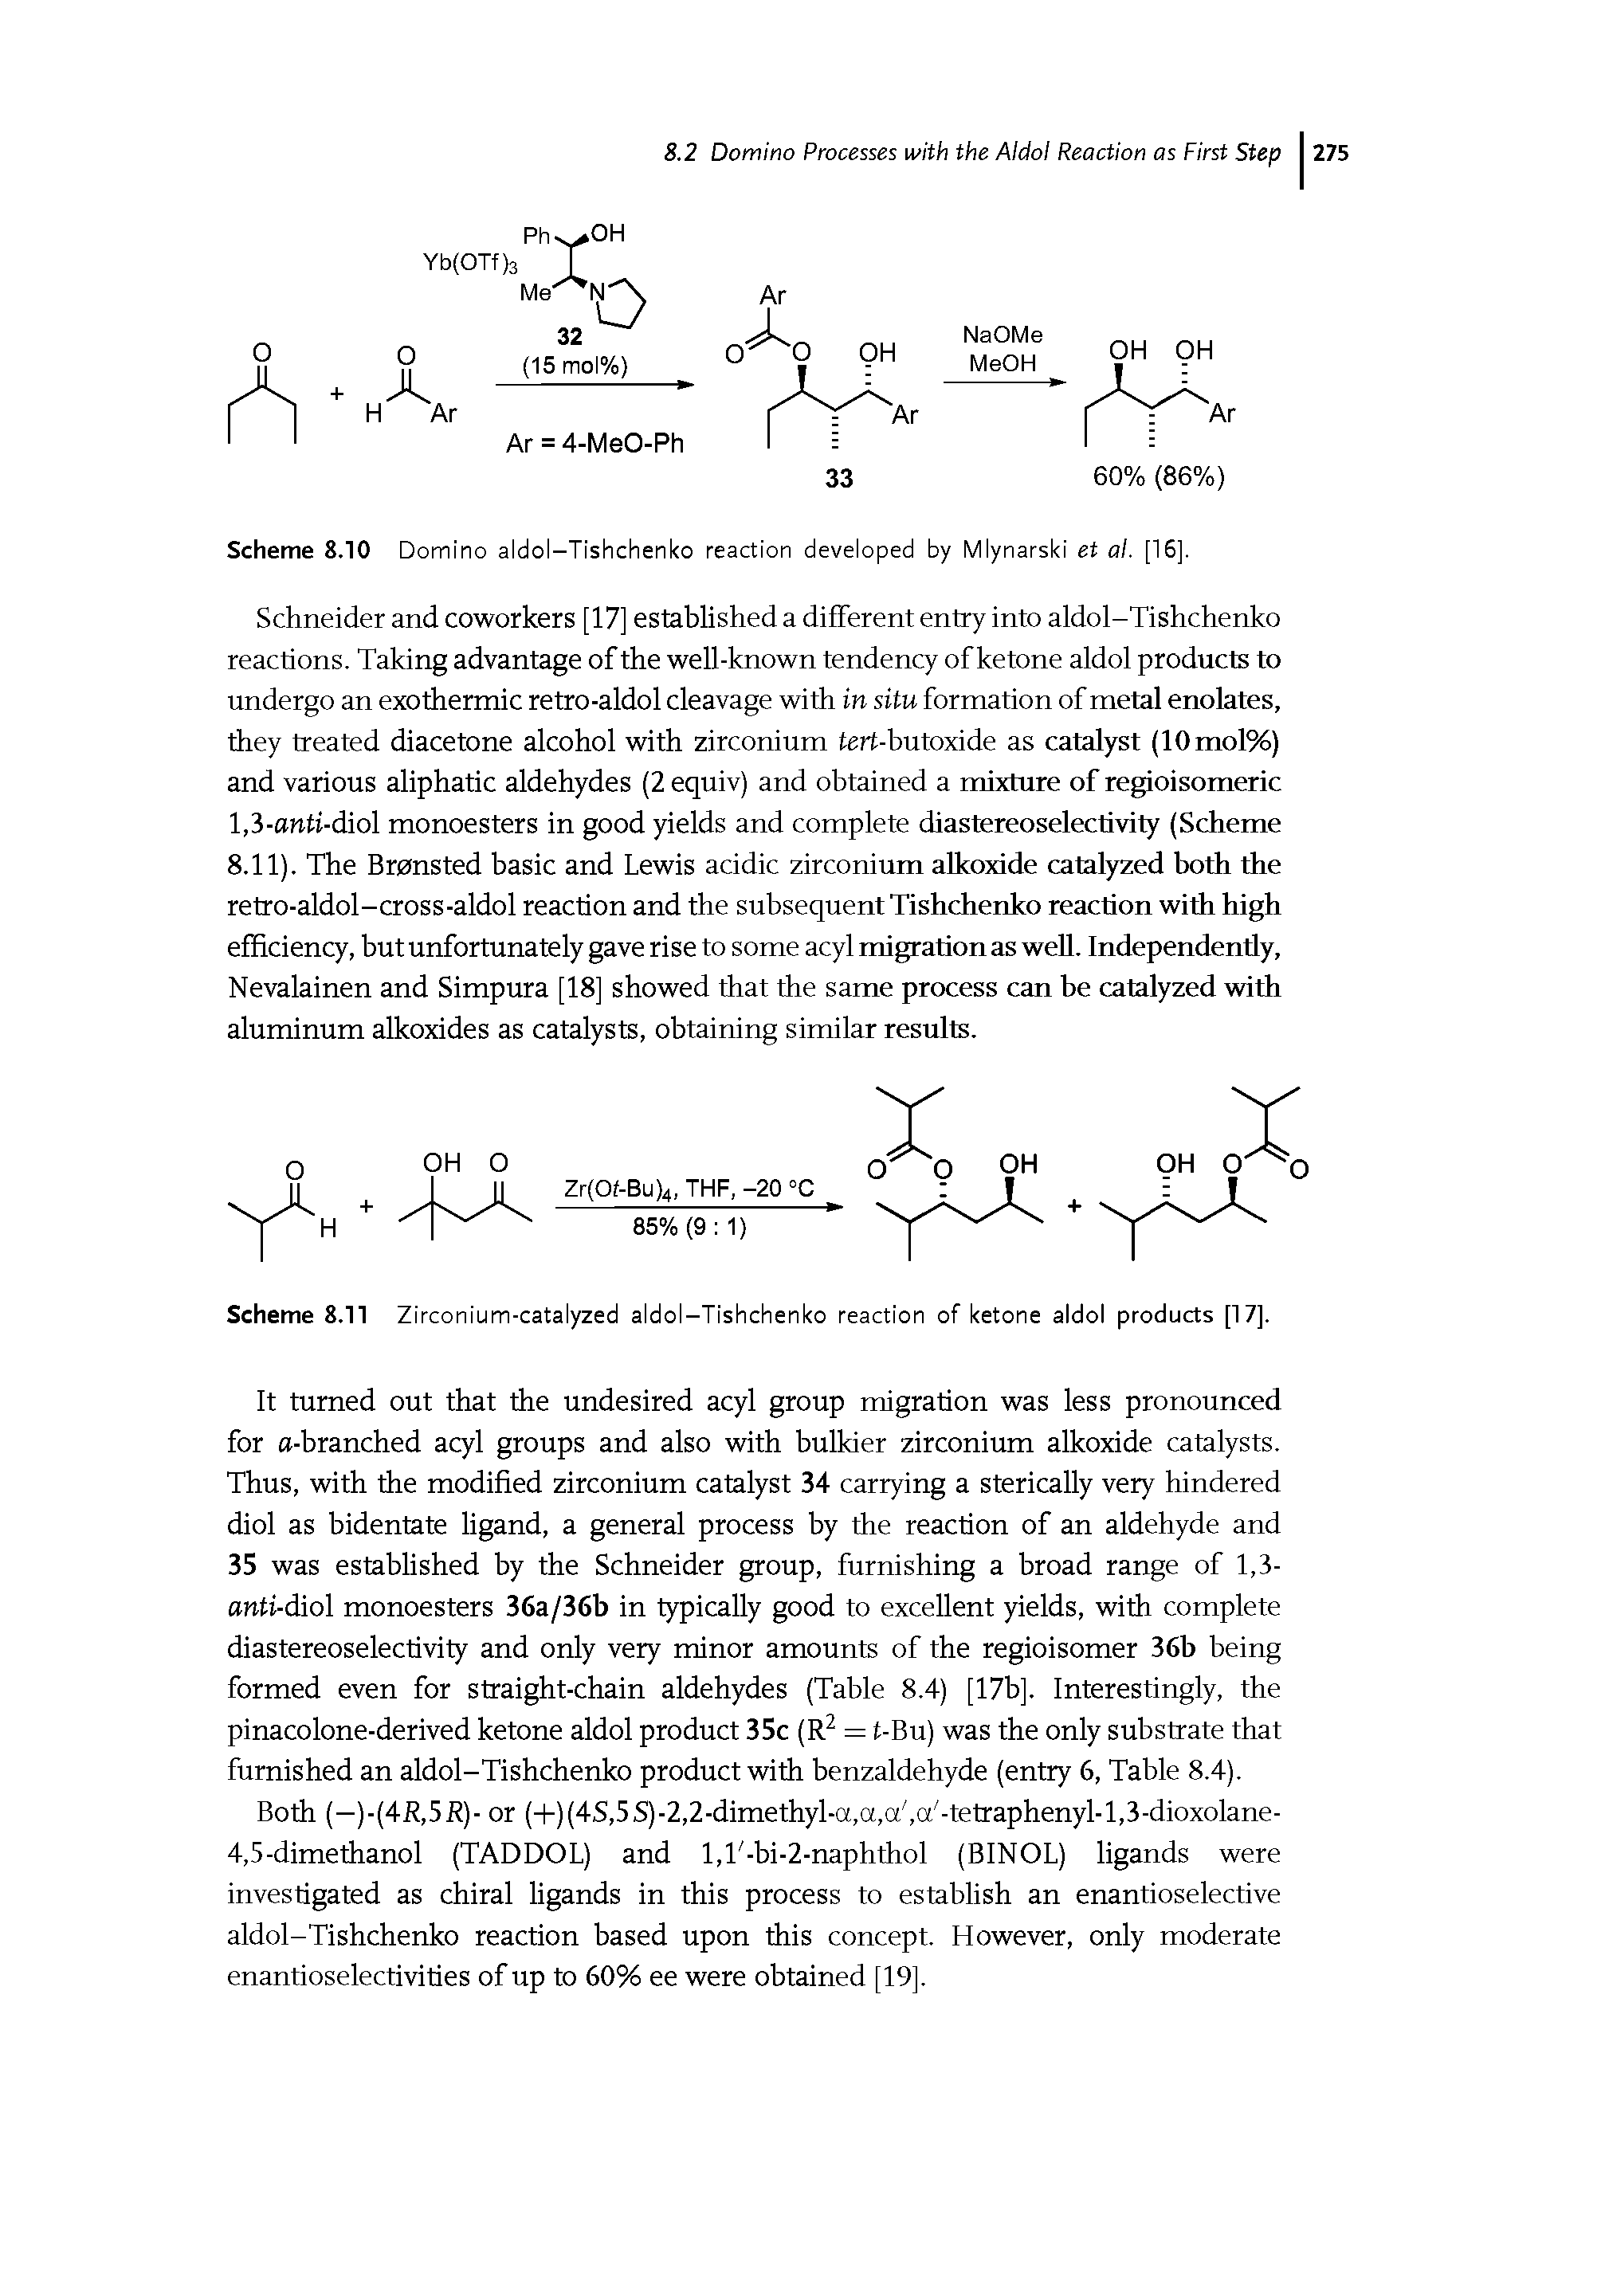 Scheme 8.11 Zirconium-catalyzed aldol-Tishchenko reaction of ketone aldol products [17].